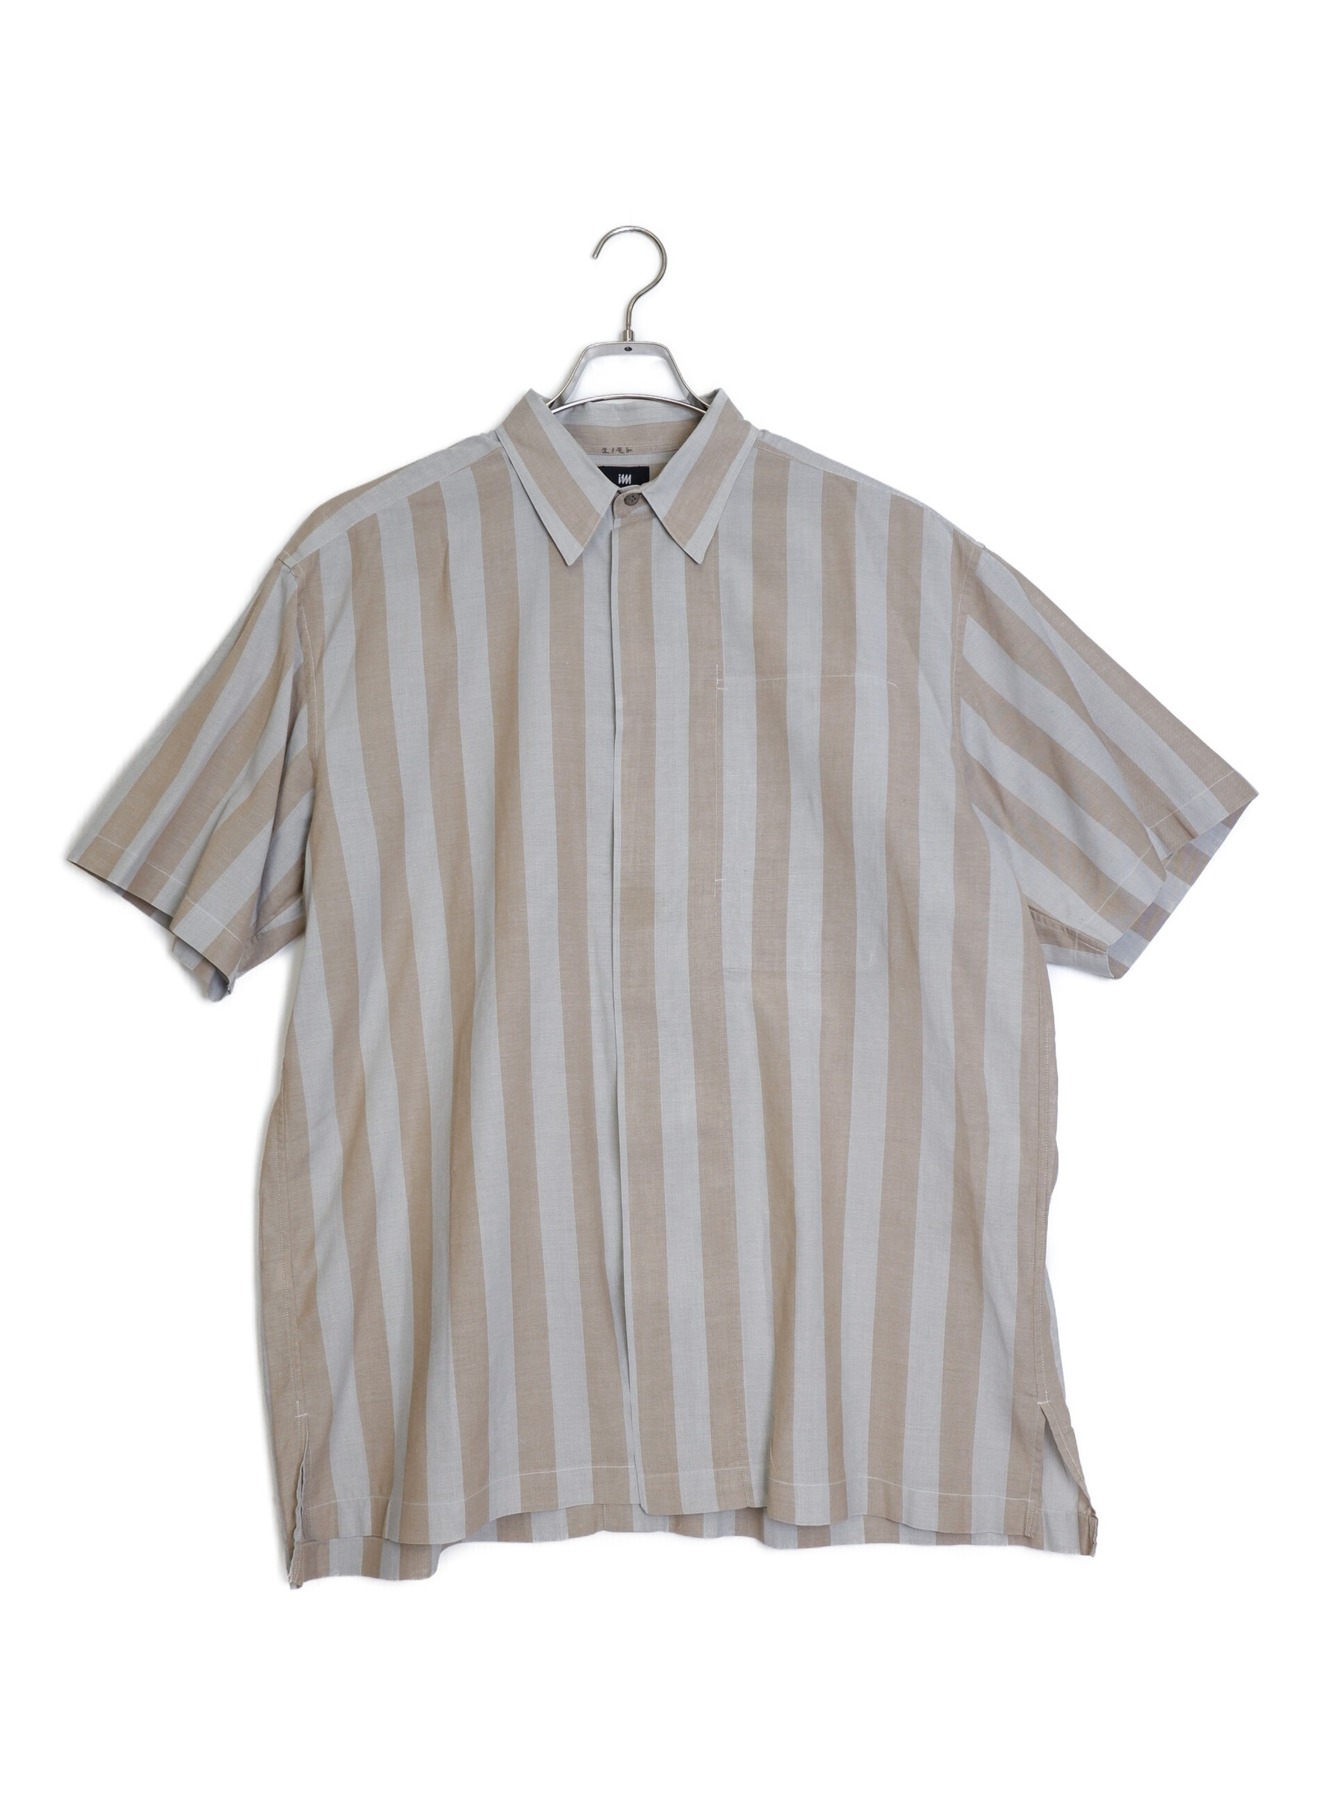 90s ISSEY MIYAKE vintage shirt イッセイミヤケ袖丈55